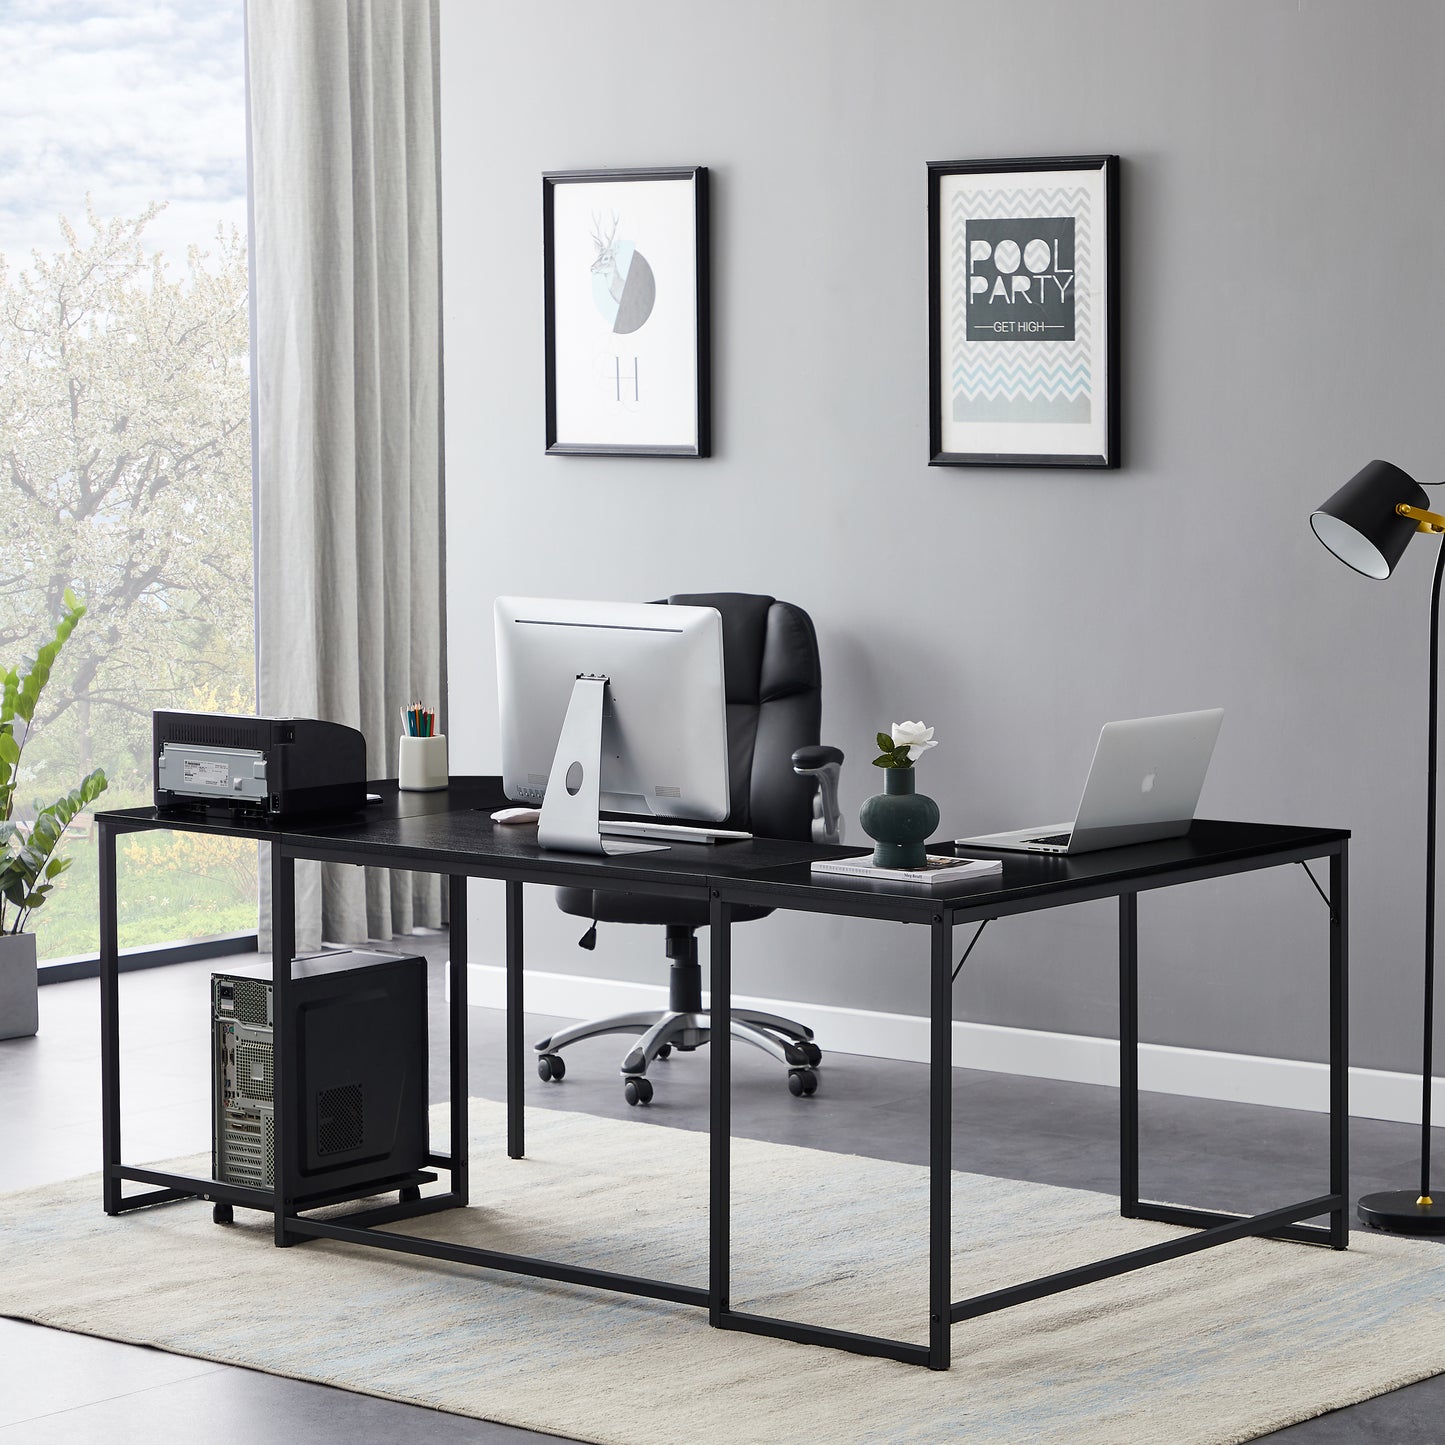 U-shaped Industrial Corner Computer Desk with CPU Stand - Black